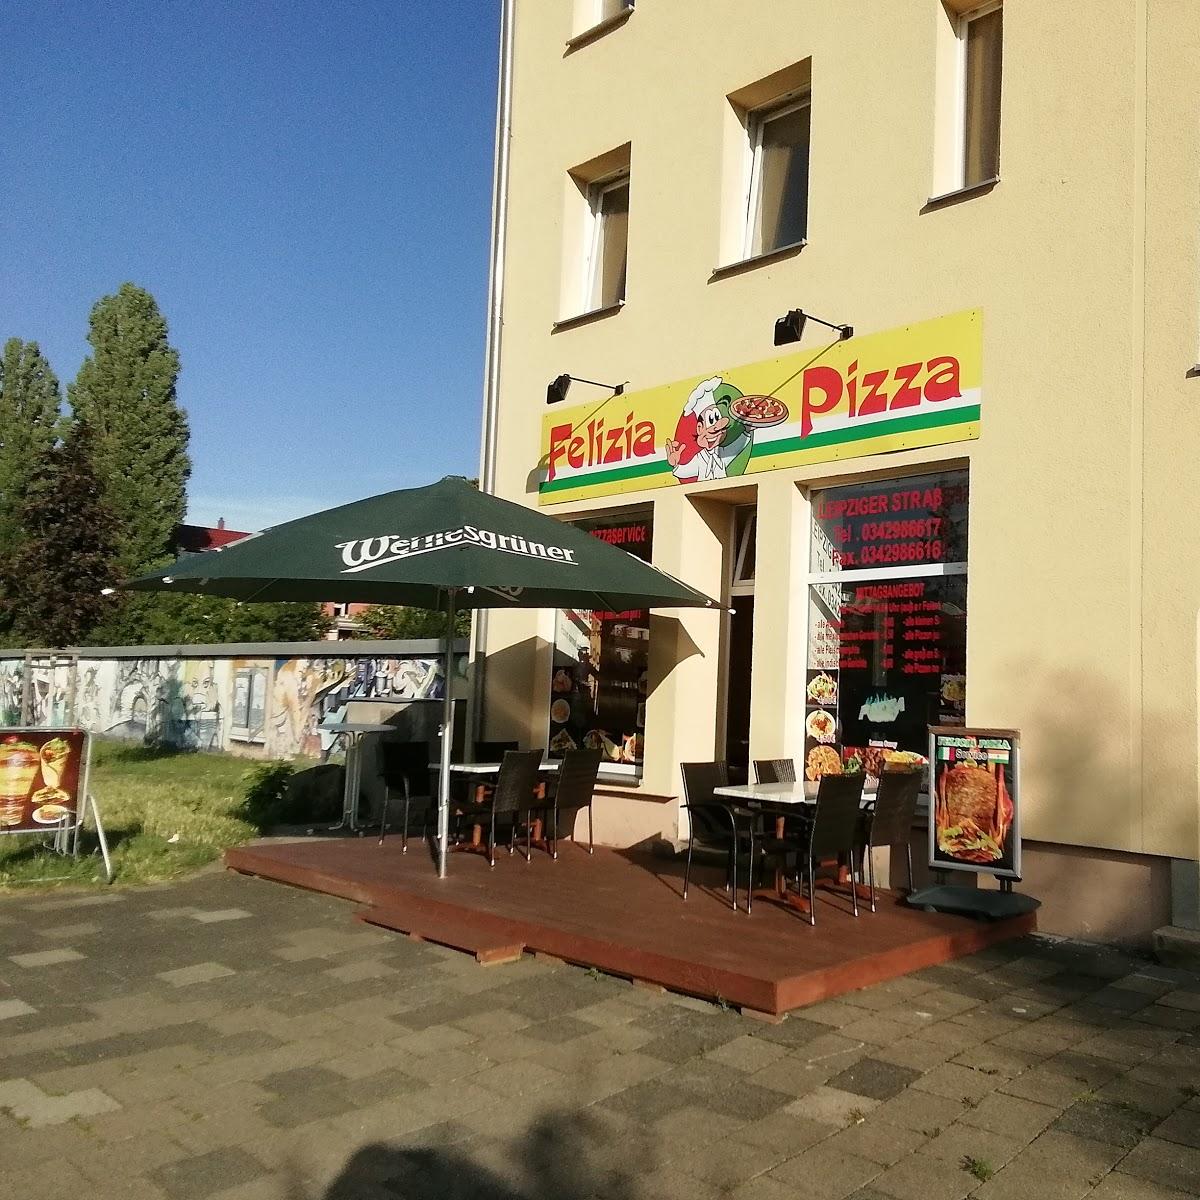 Restaurant "Felicia Pizza" in Taucha